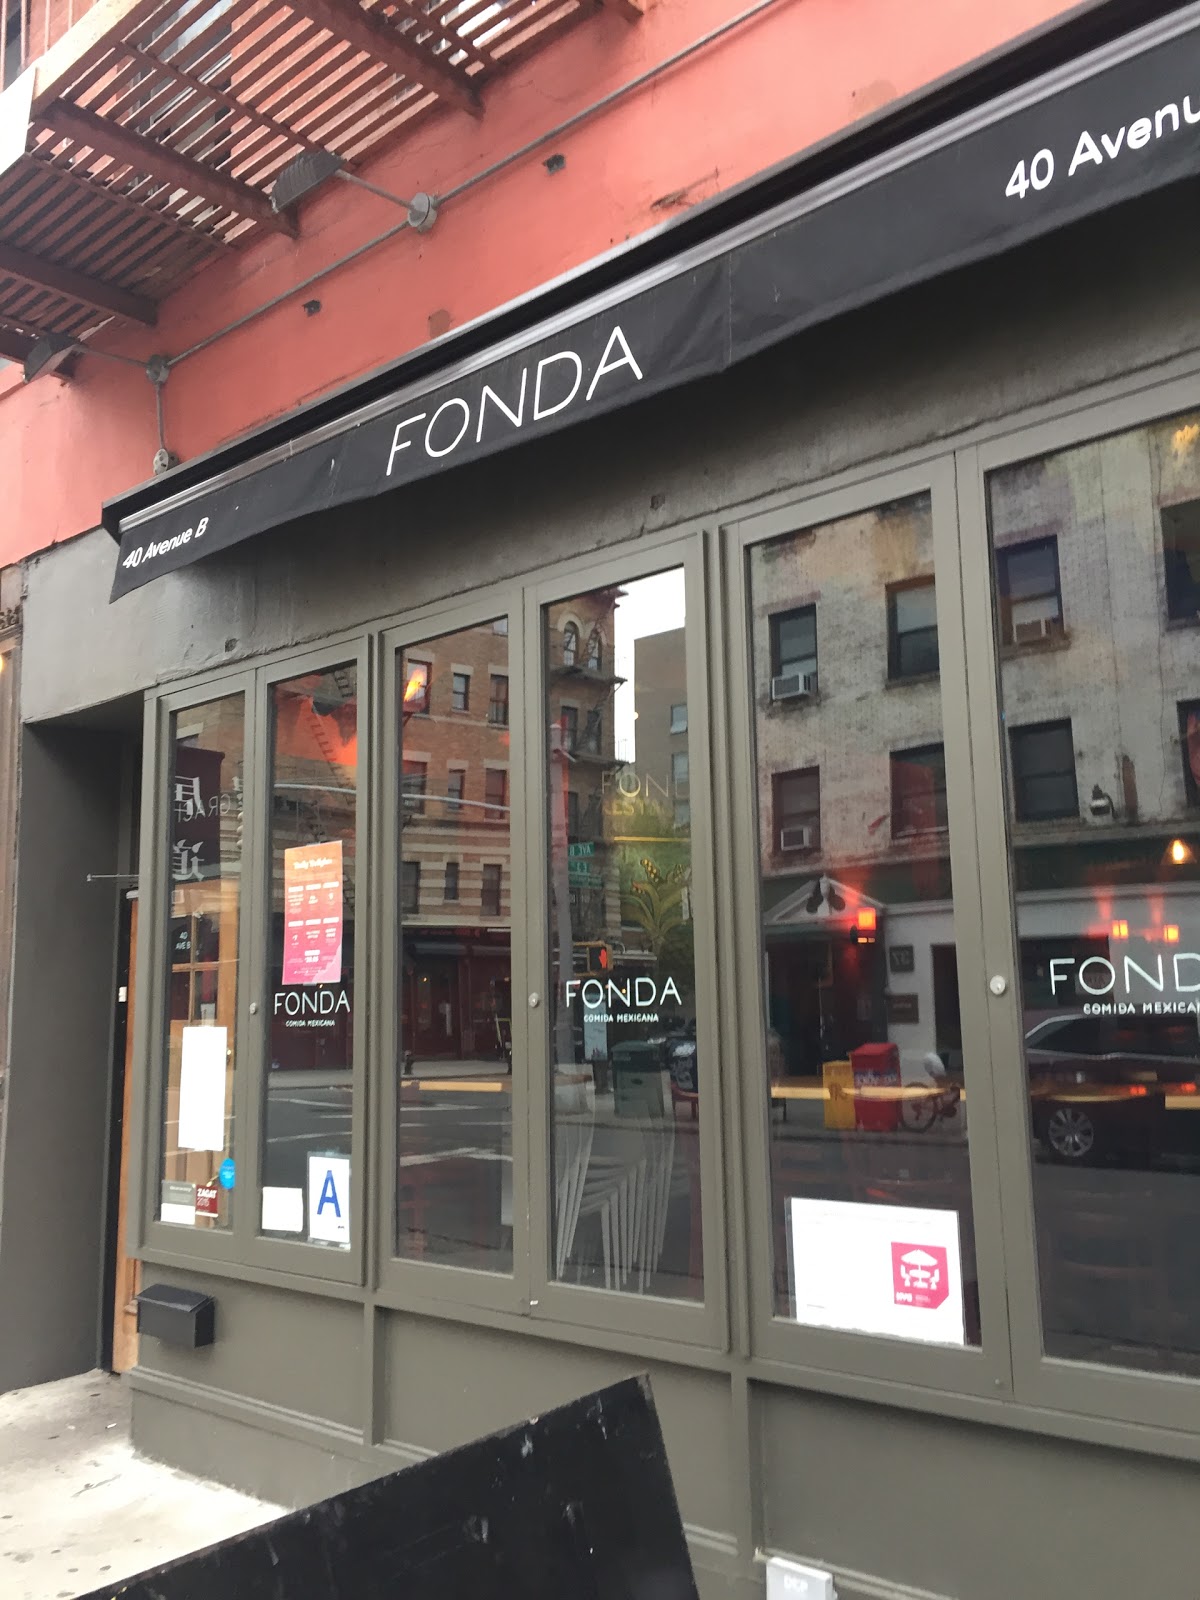 Photo of Fonda in New York City, New York, United States - 1 Picture of Restaurant, Food, Point of interest, Establishment, Bar